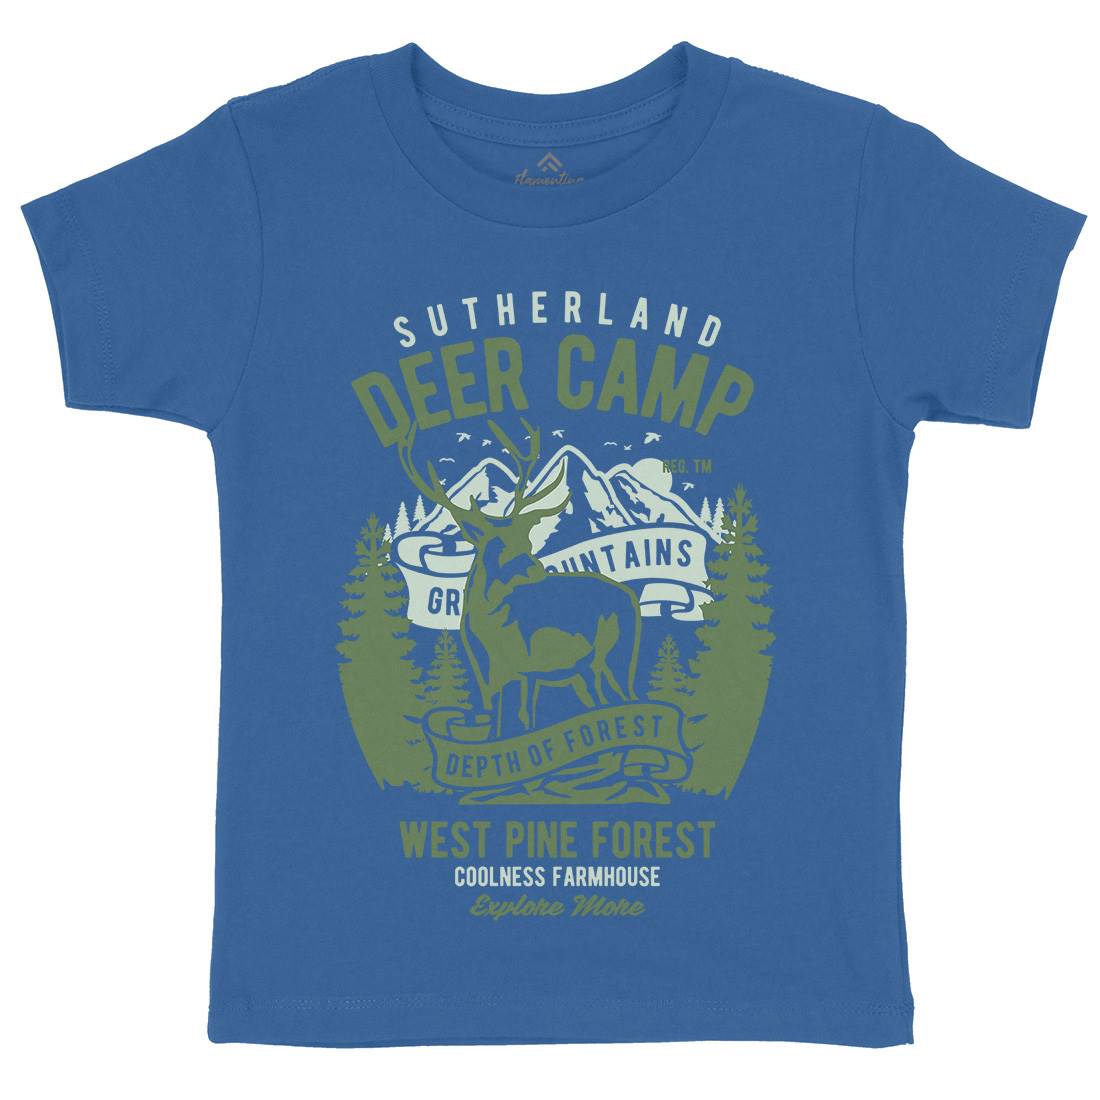 Deer Camp Kids Organic Crew Neck T-Shirt Animals B400